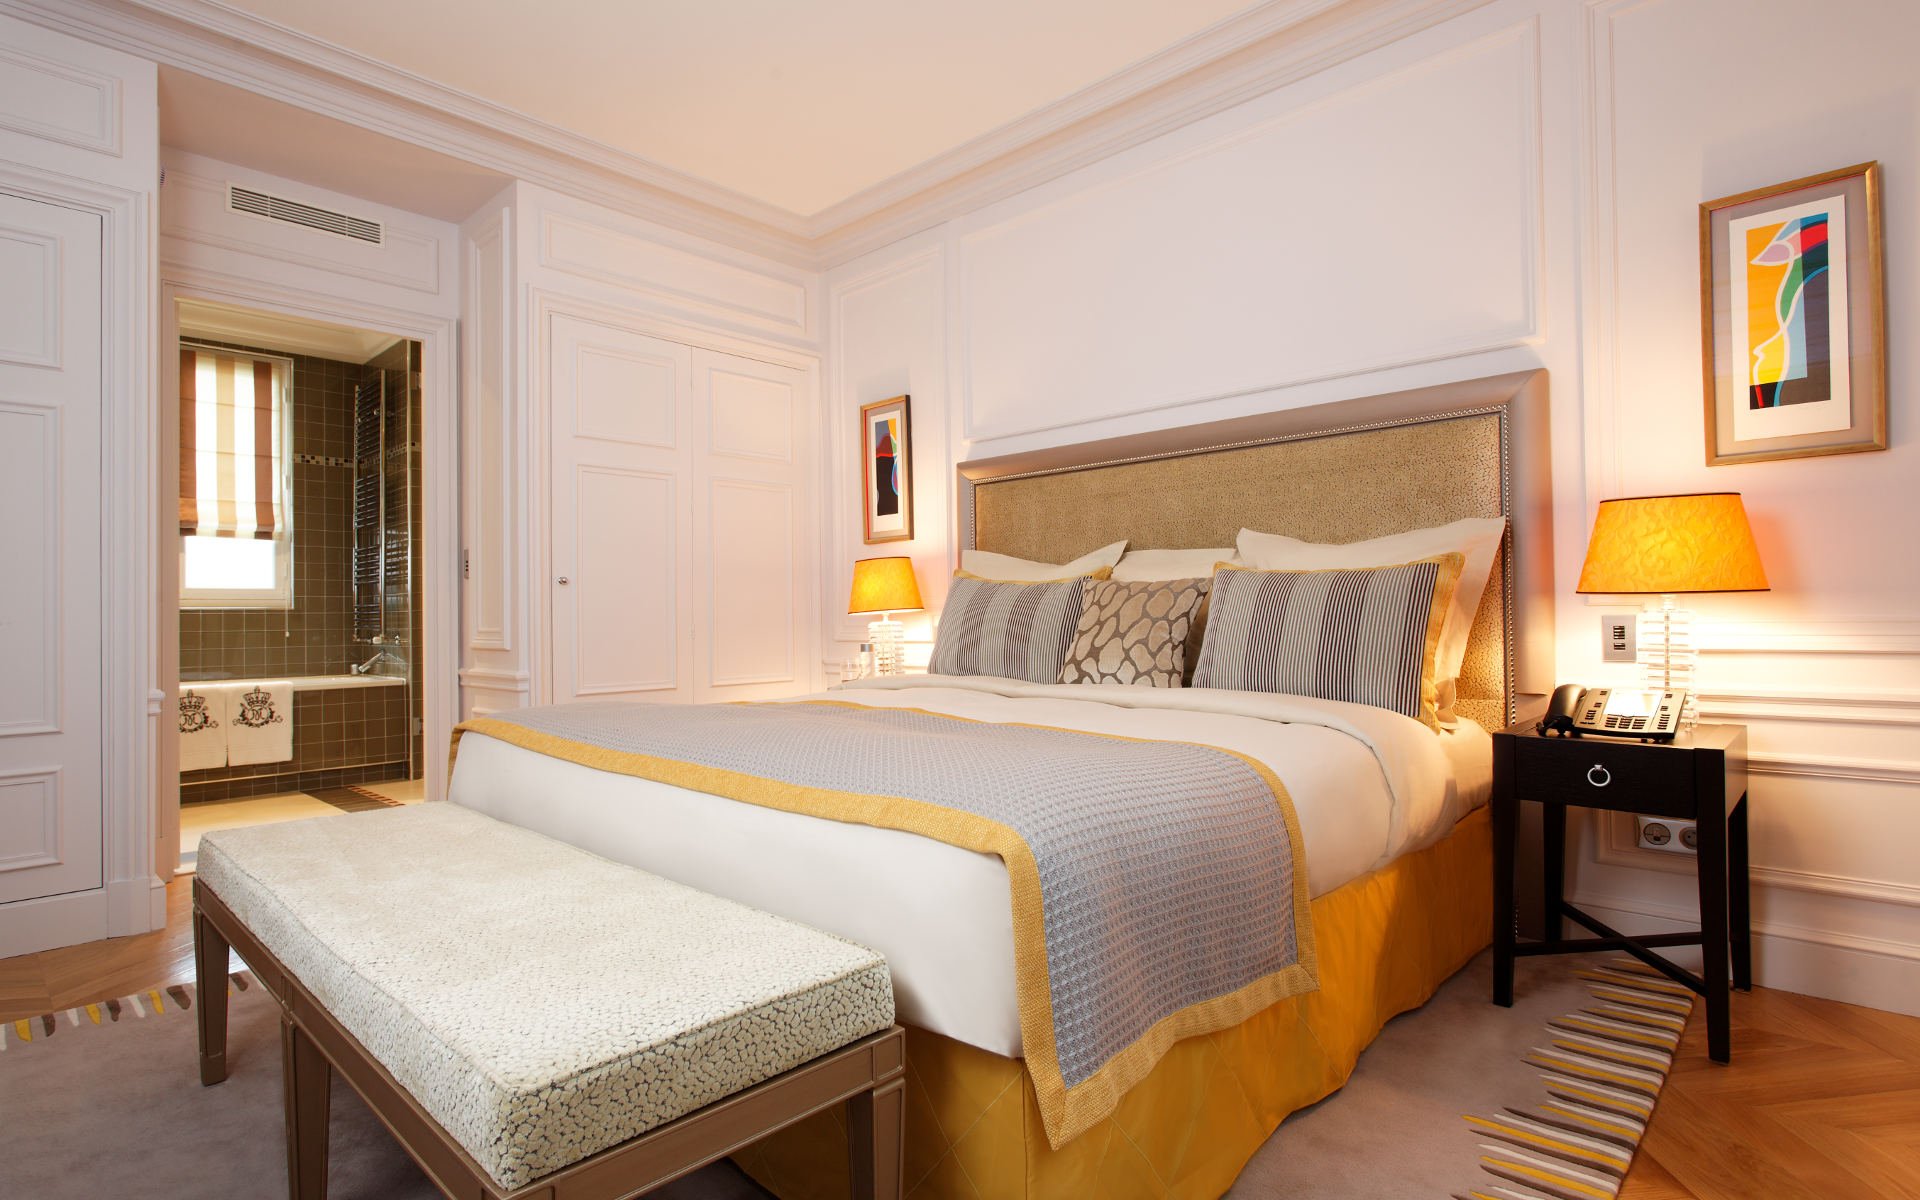 260/Suites/Suite panoramique/Suite Panoramique - 2 Bedroom -  Majestic Hotel-Spa 3.jpg